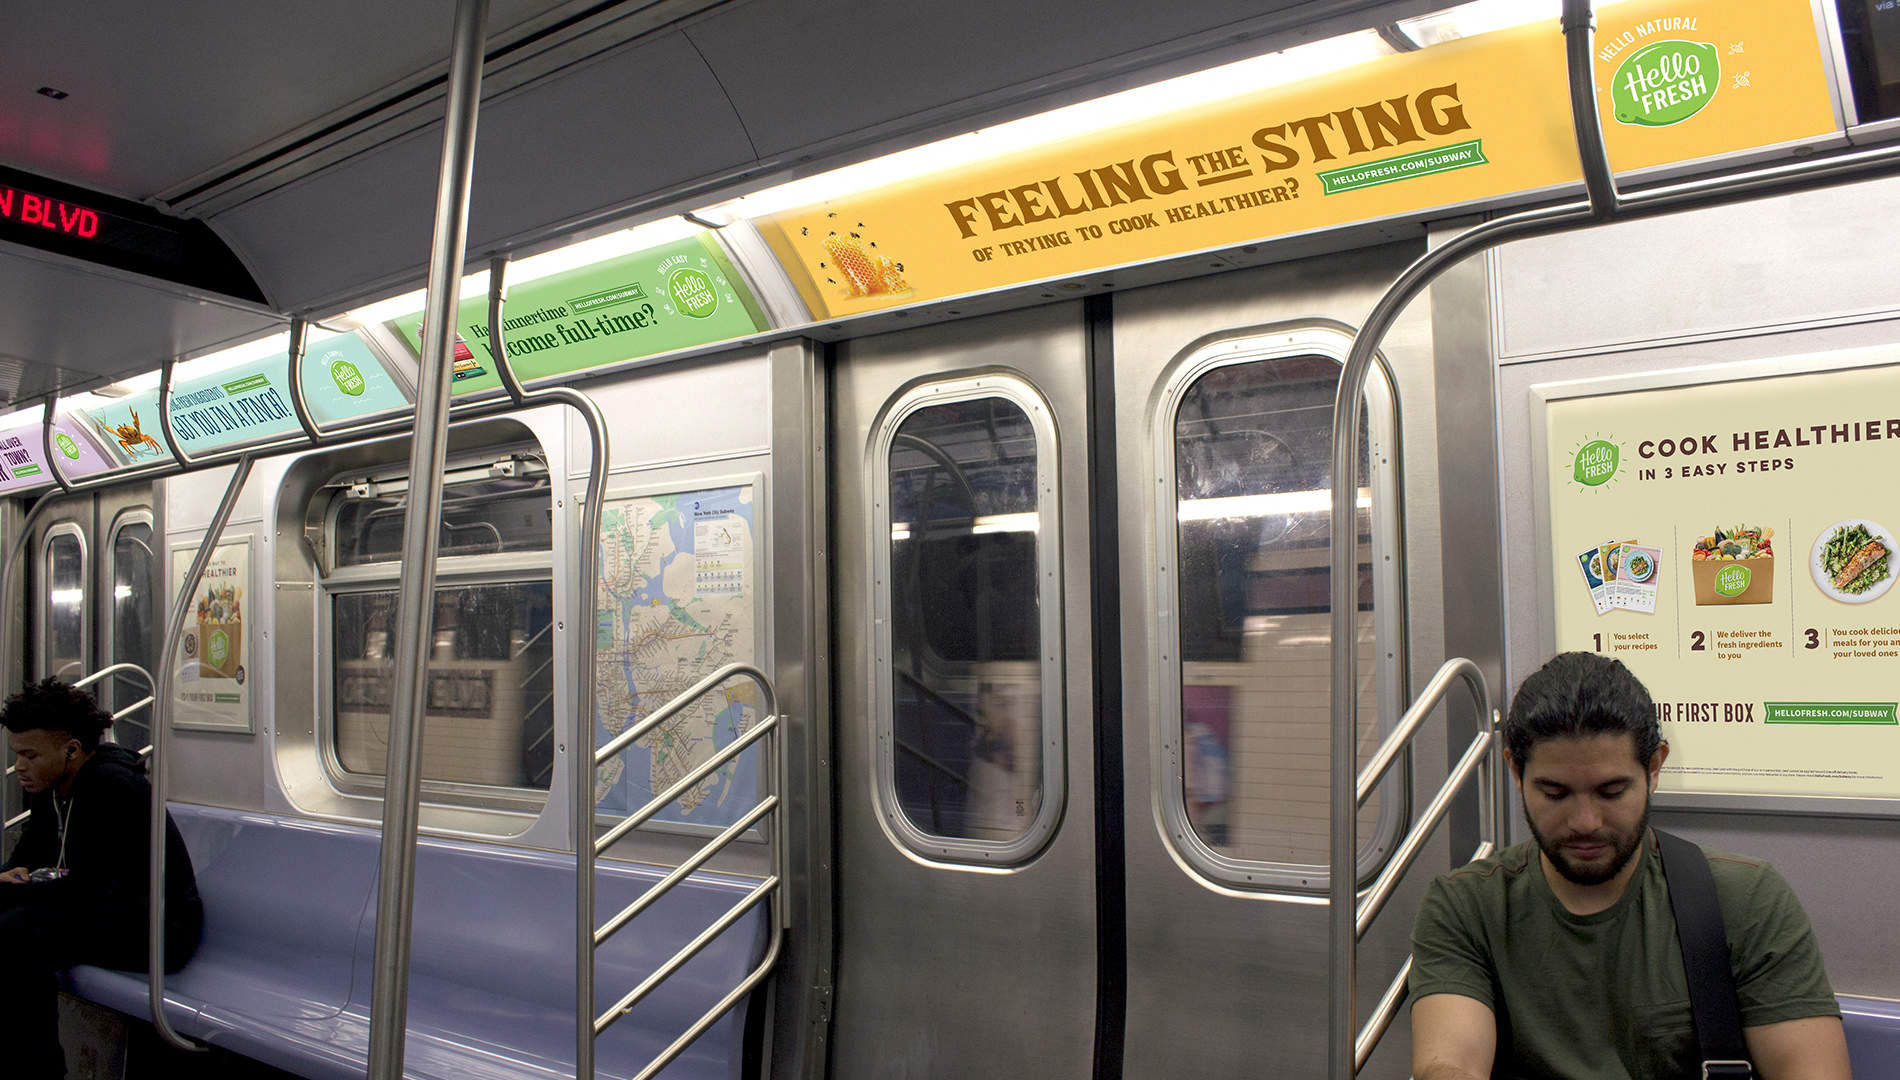 HelloFresh transit campaign on NYC subway